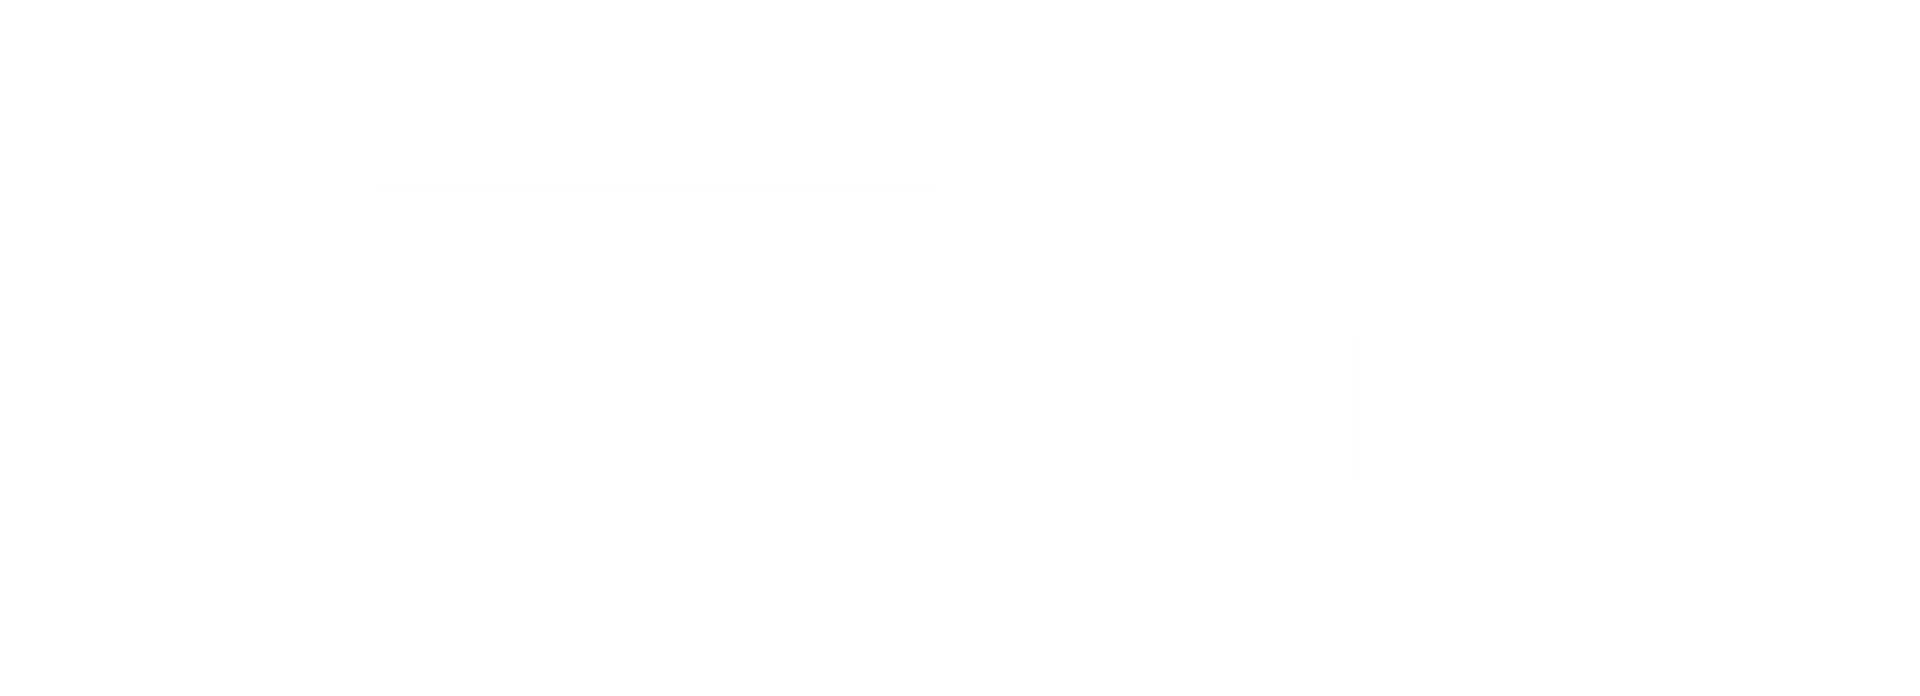 Young America Realty Company Logo